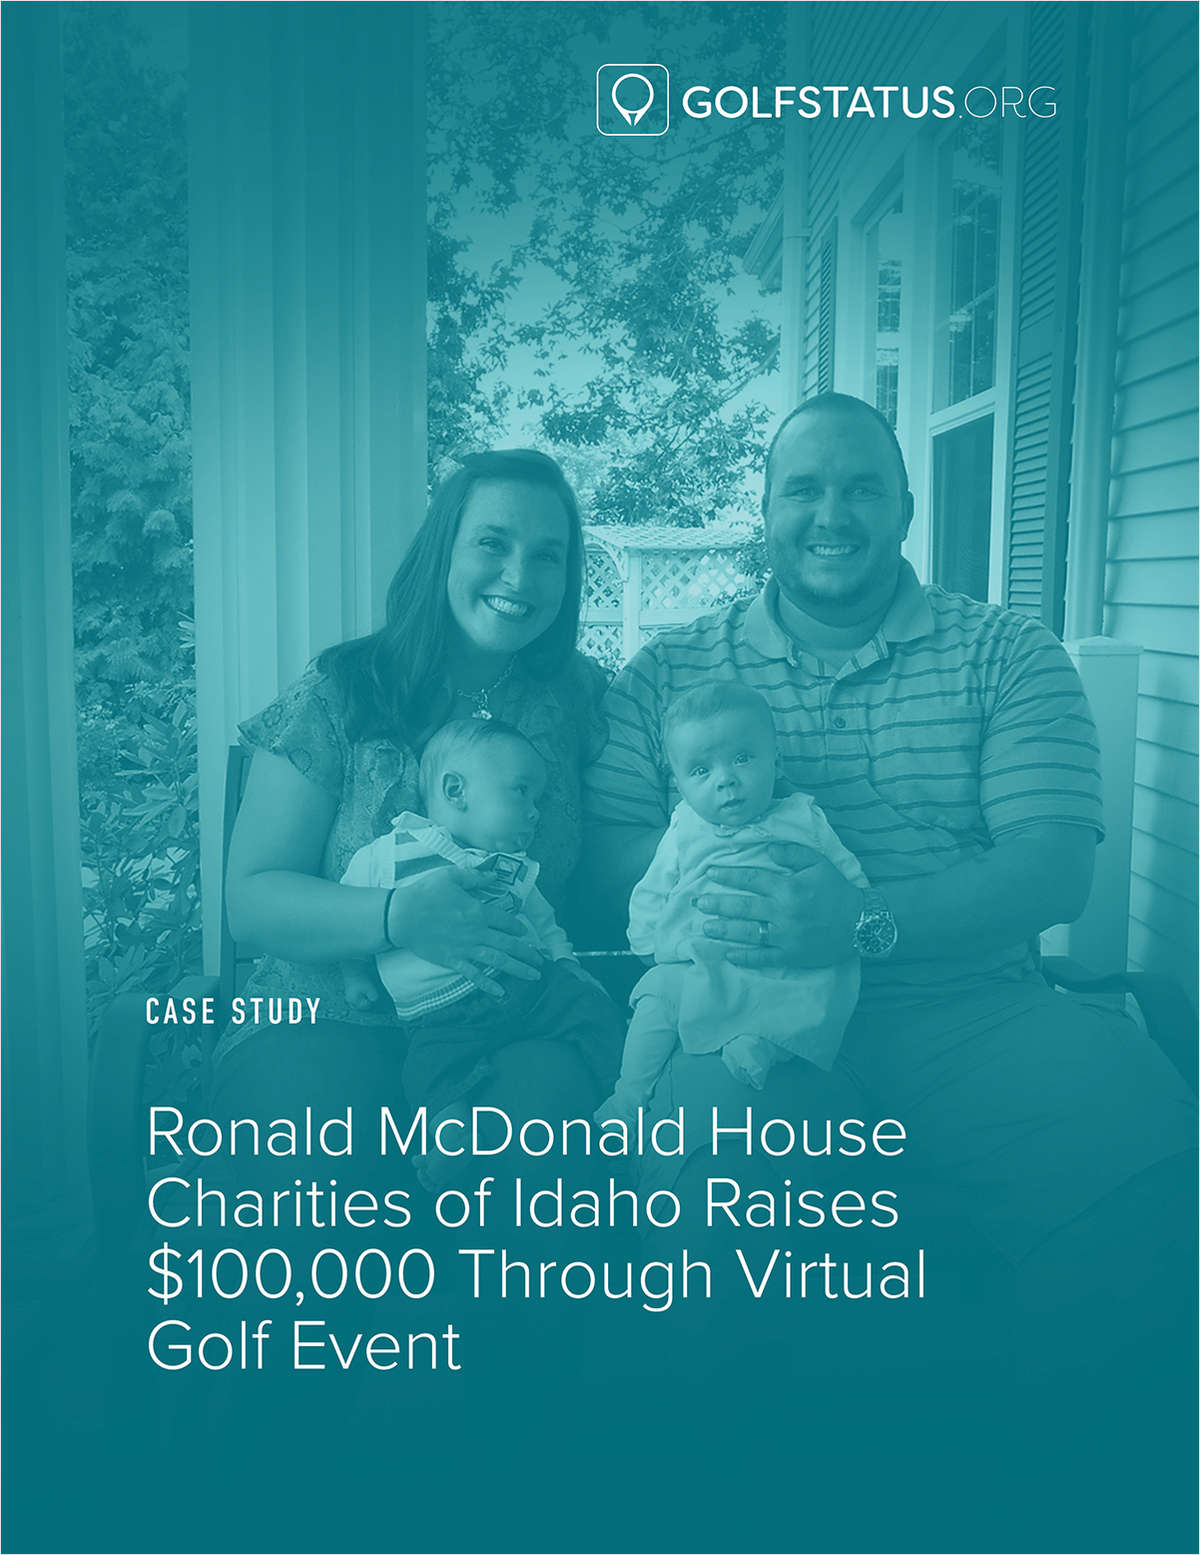 Case Study: Ronald McDonald House Charities of Idaho Raises $100,000 Through Virtual Golf Event